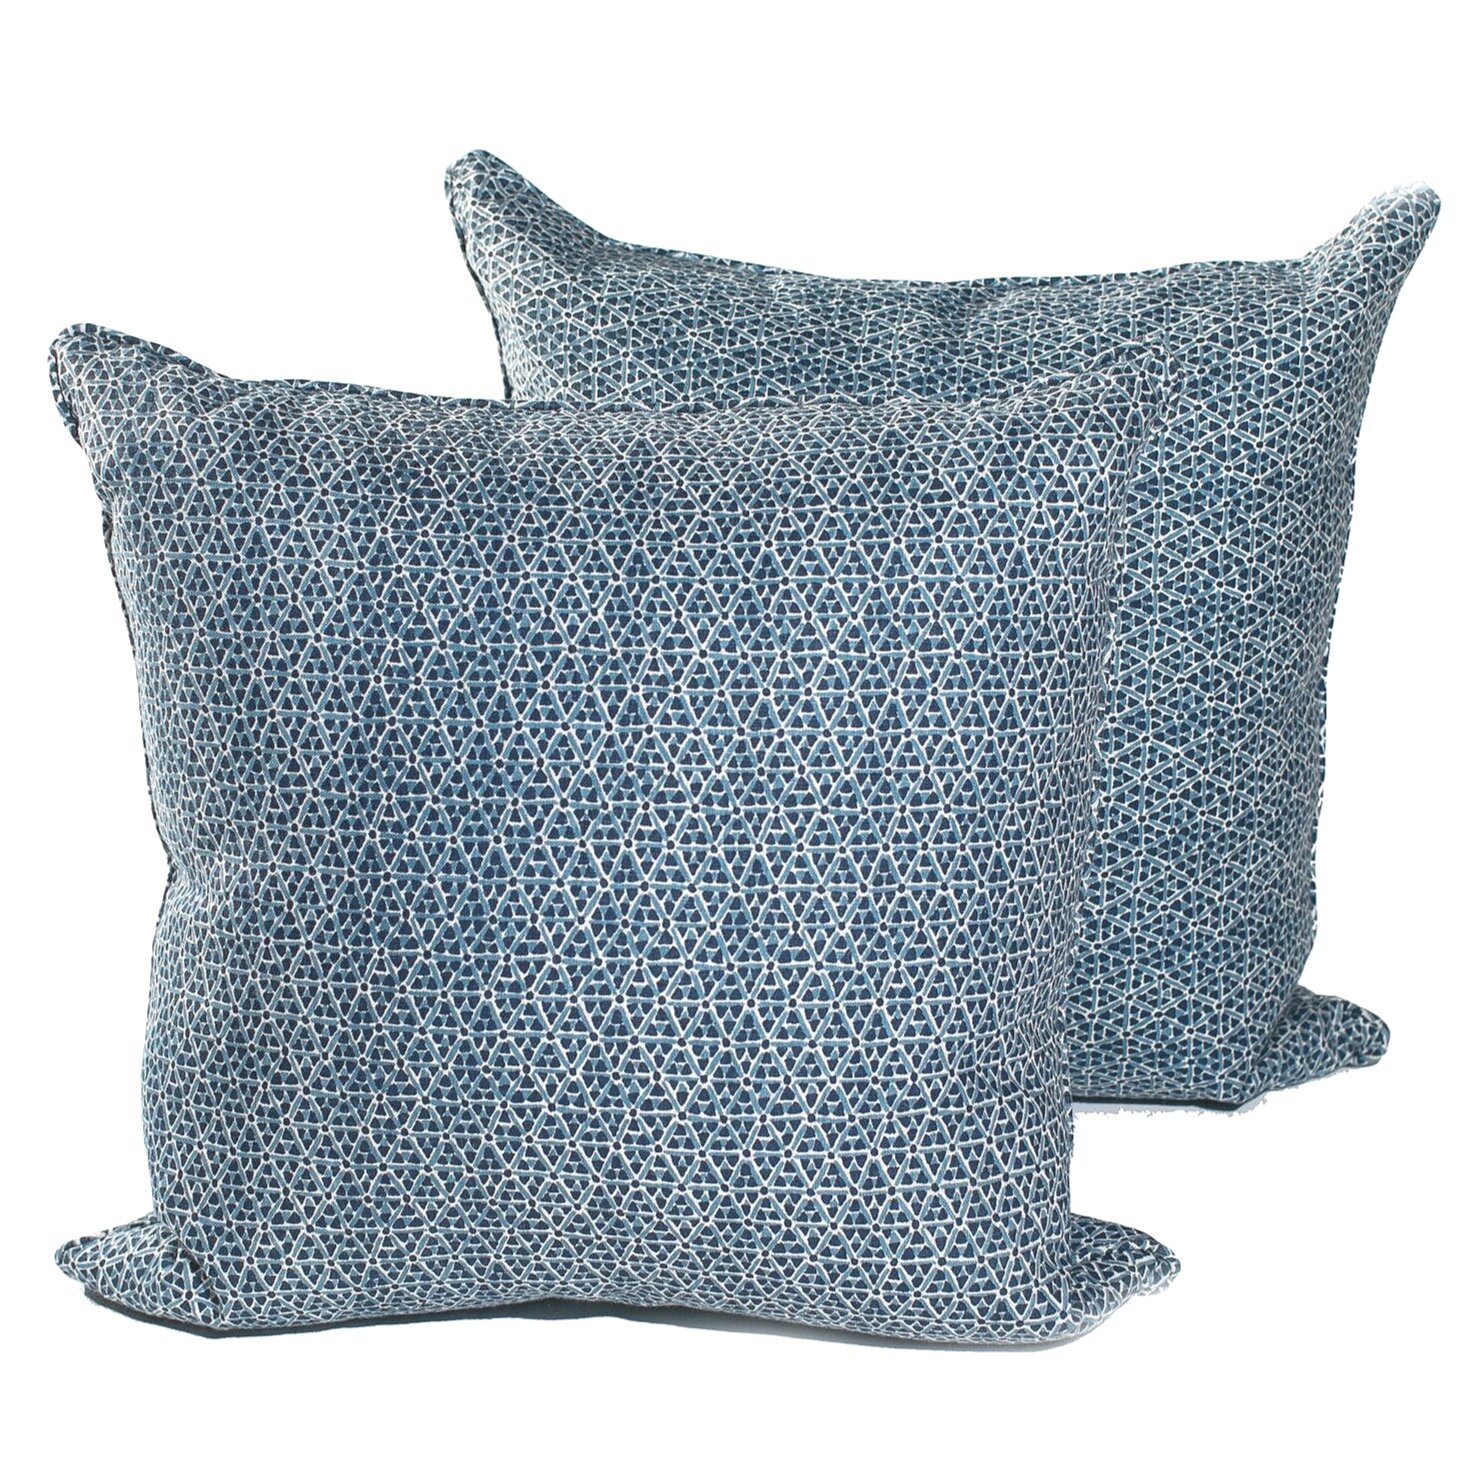 Rooms & Gardens — Pair of Blockprint Pillows